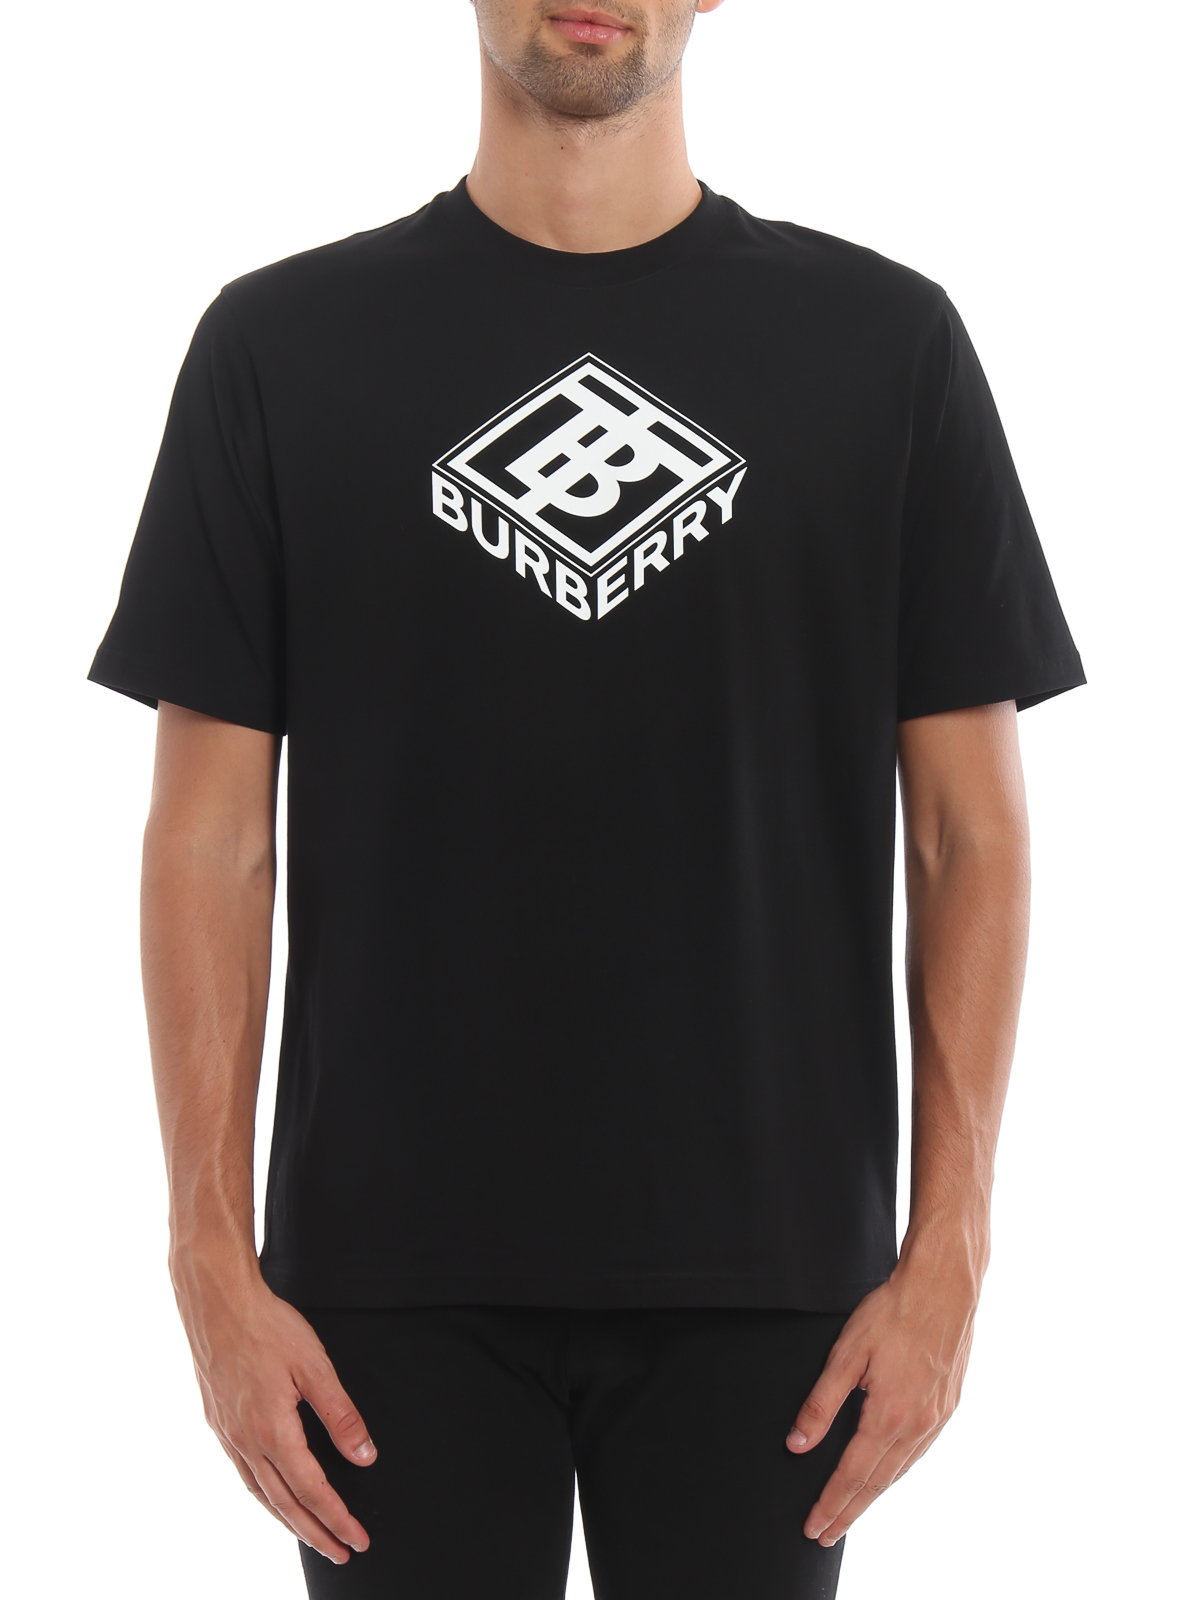 T-shirts Burberry - Ellison black T-shirt - 8021831 | Shop online at iKRIX